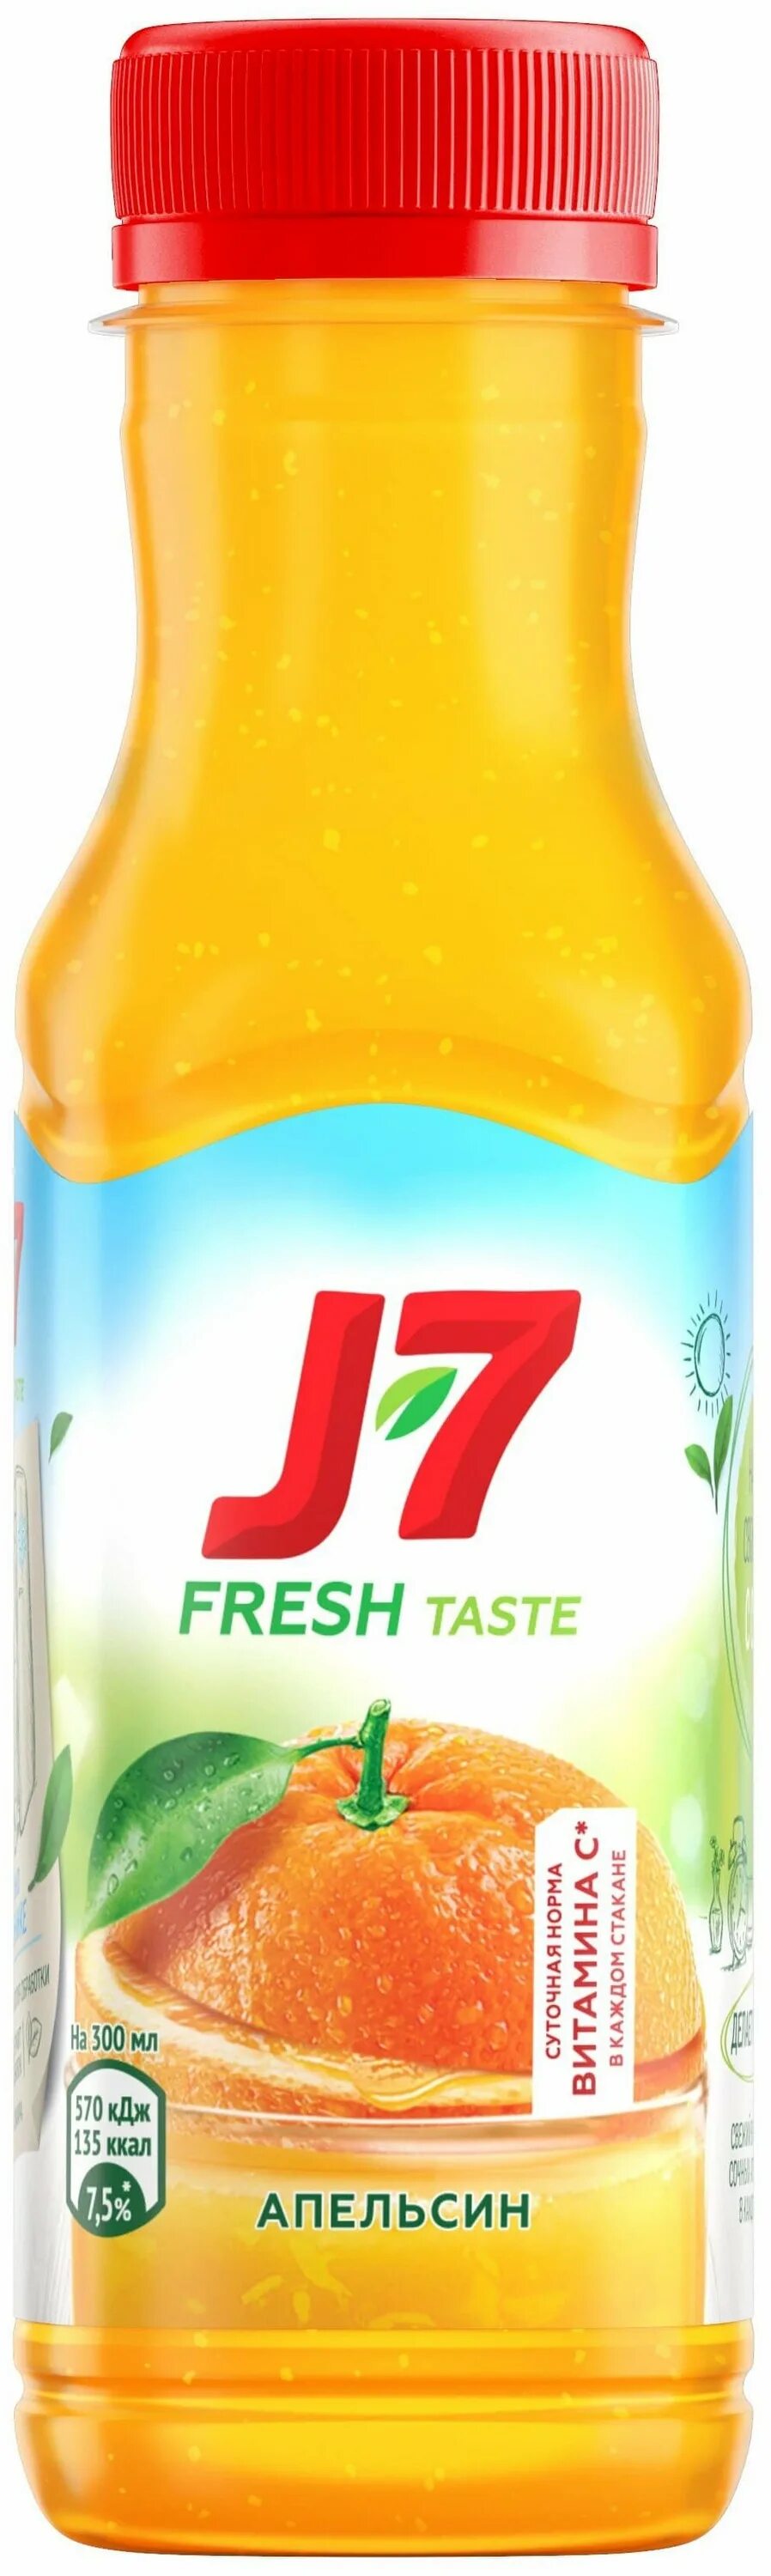 7 соков купить. Сок j7 апельсин Fresh. Сок j7 Fresh taste апельсин. Сок j7 мультифрукт. J7 Fresh taste апельсин.